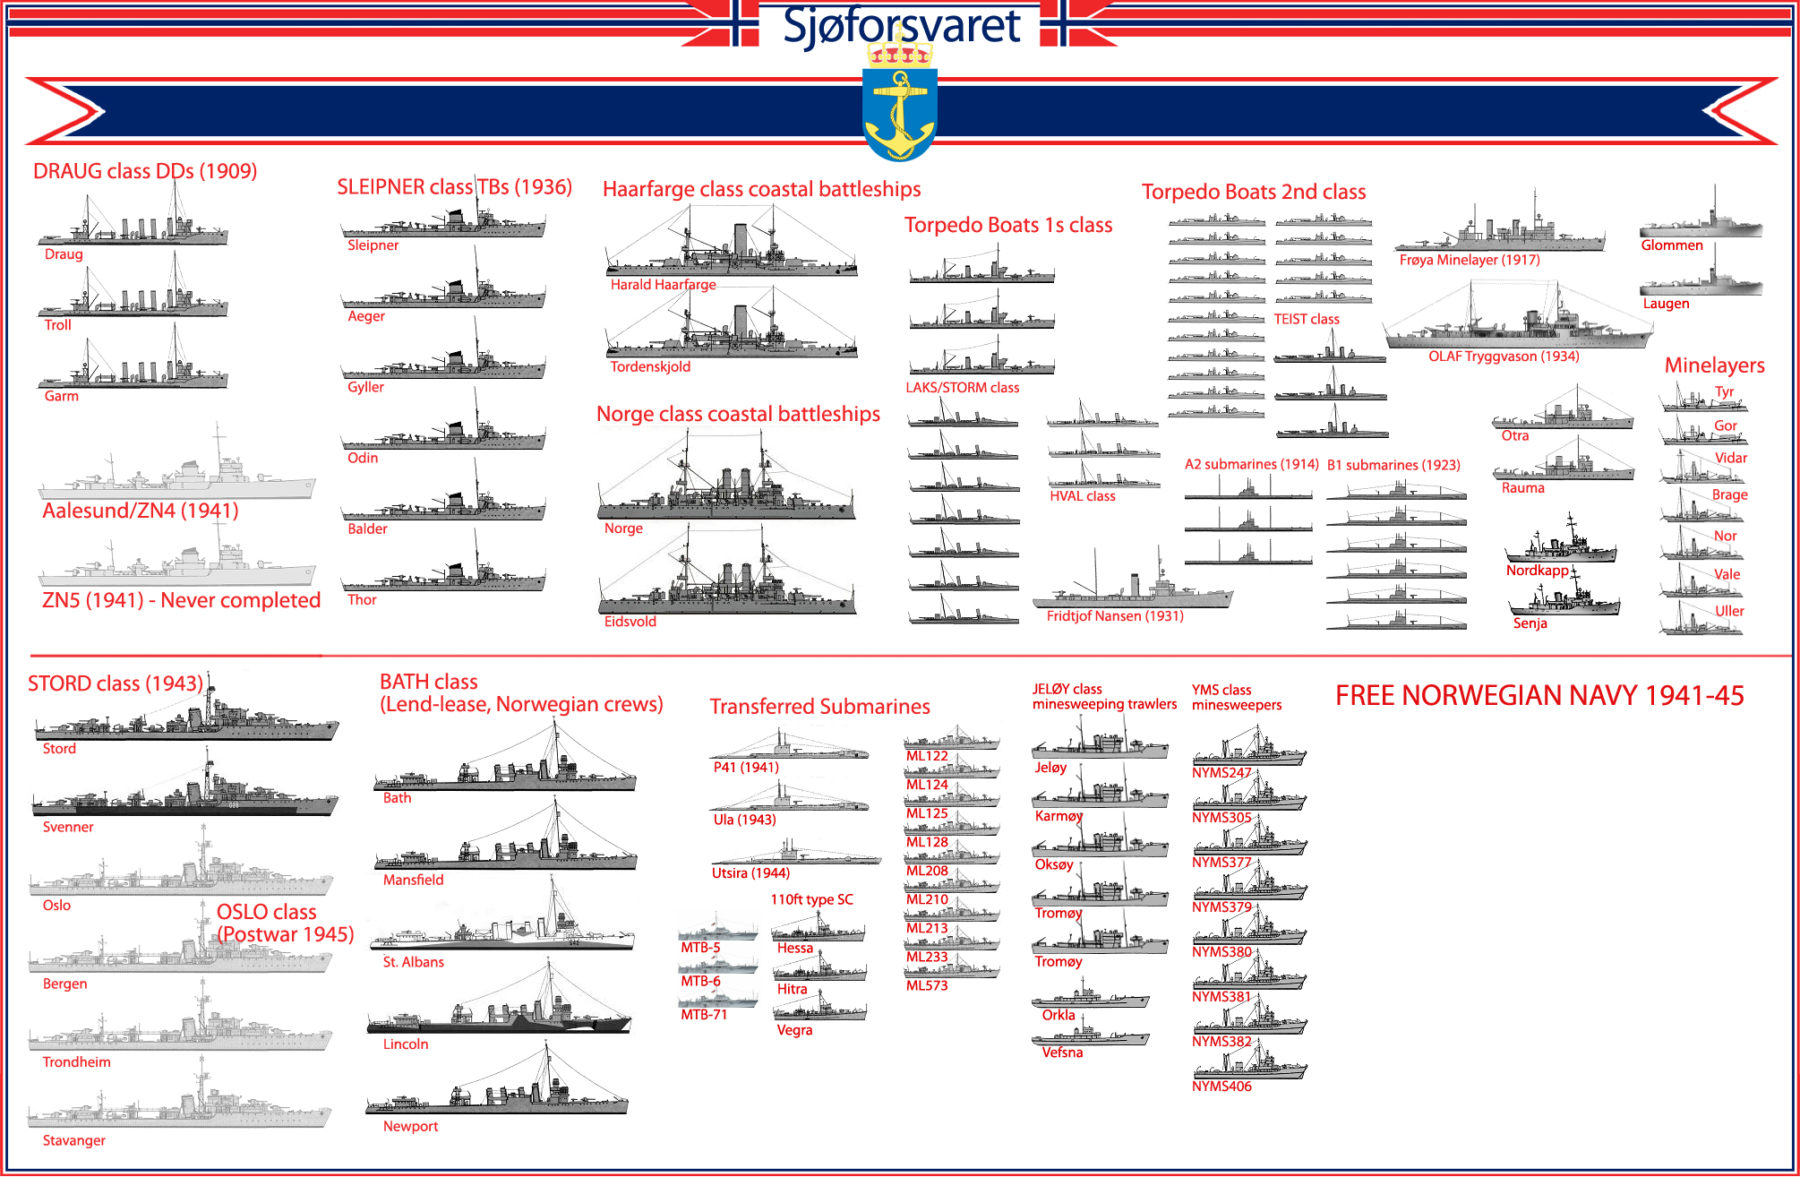 Poster of the Norwegian Royal Navy